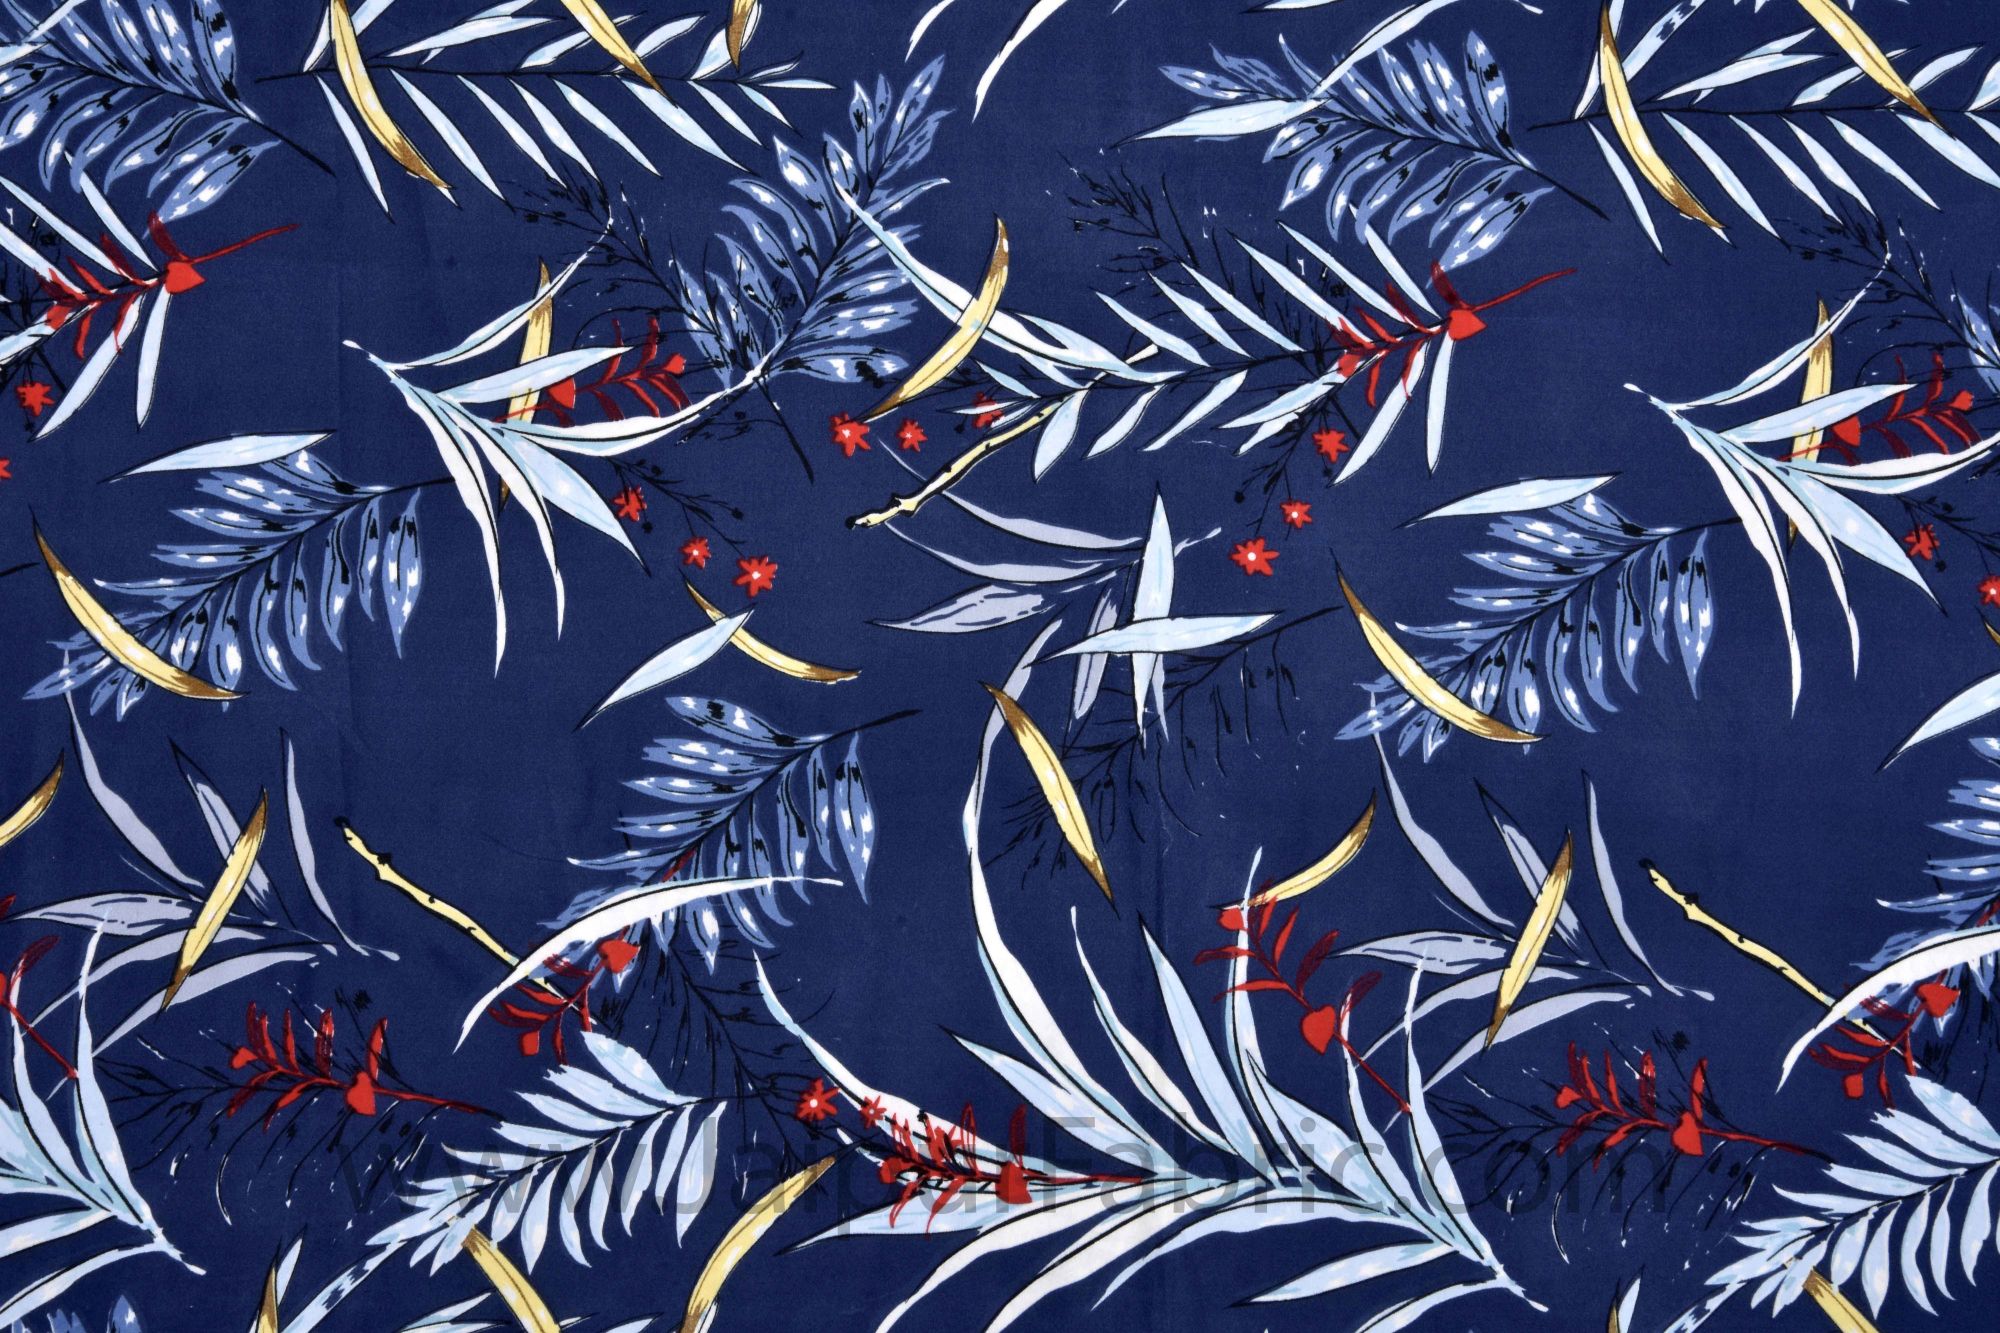 Lush Leafage Navy Blue Double Bedsheet